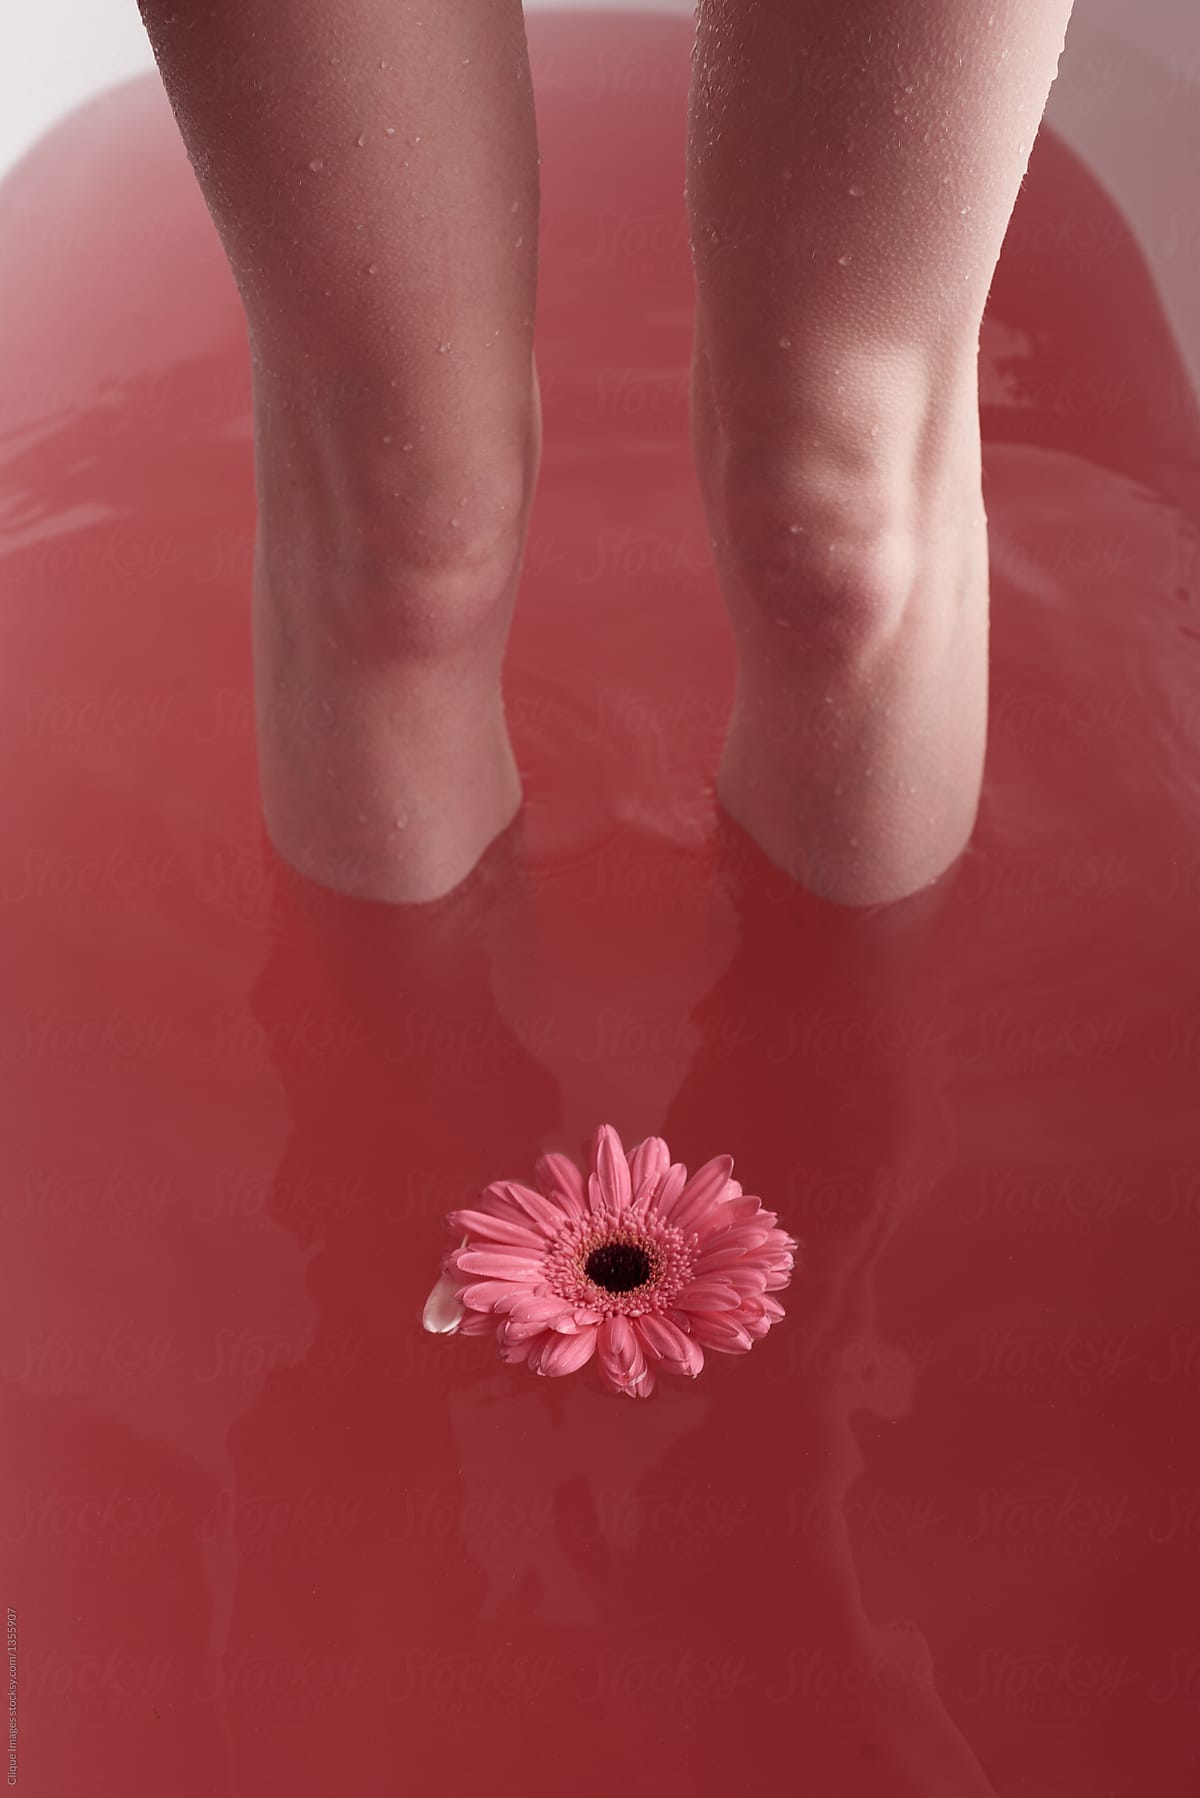 Bathing in pink water